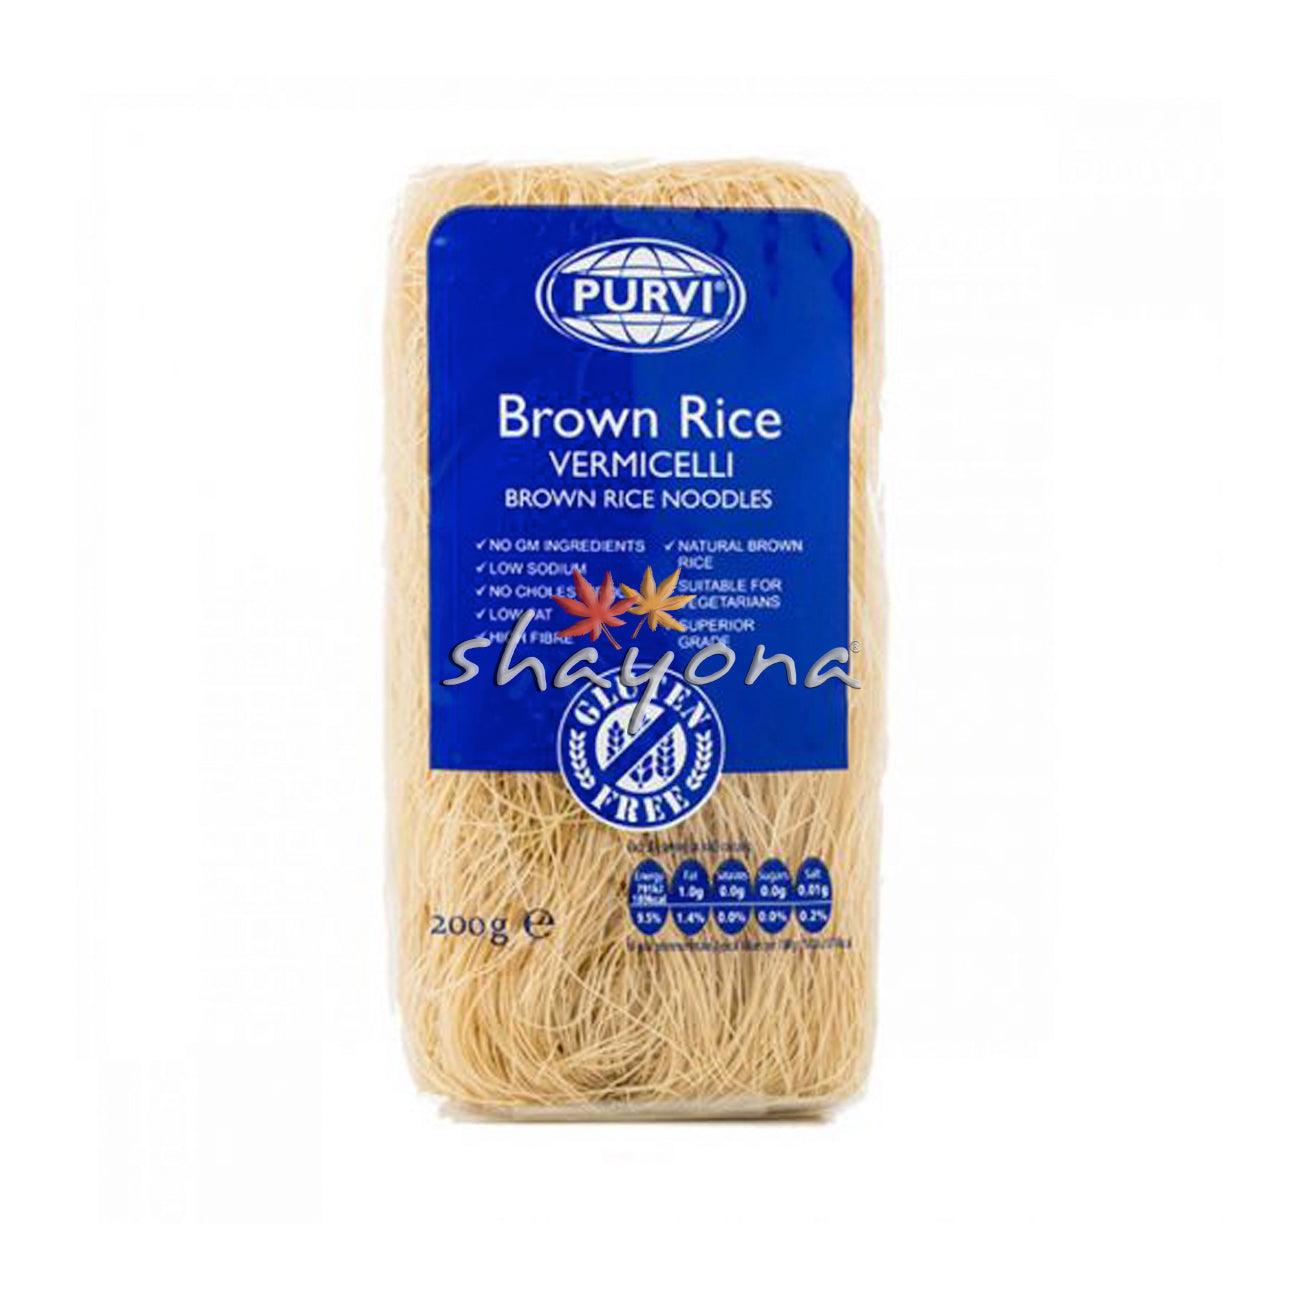 Purvi Brown Rice Vermicelli - Shayona UK